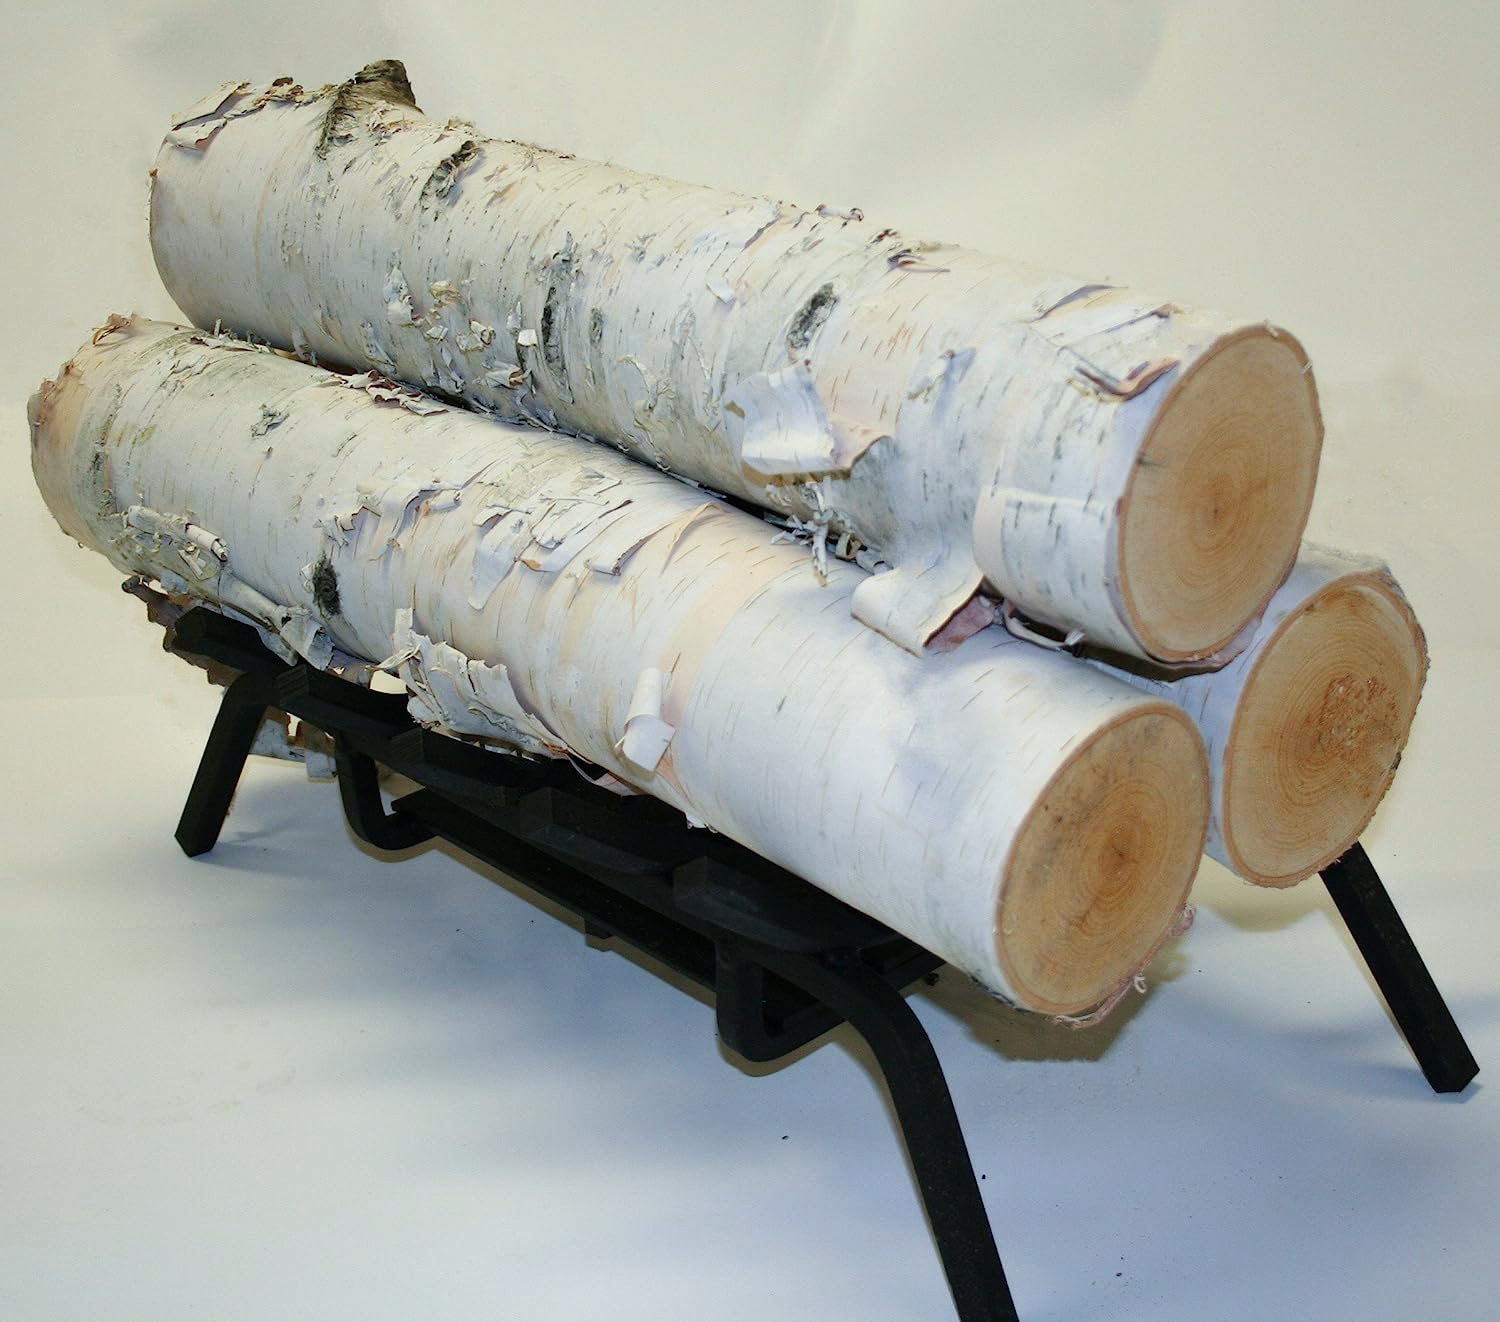 White Birch Fireplace Logs Cottagecore Decor Birch Logs Set of 5